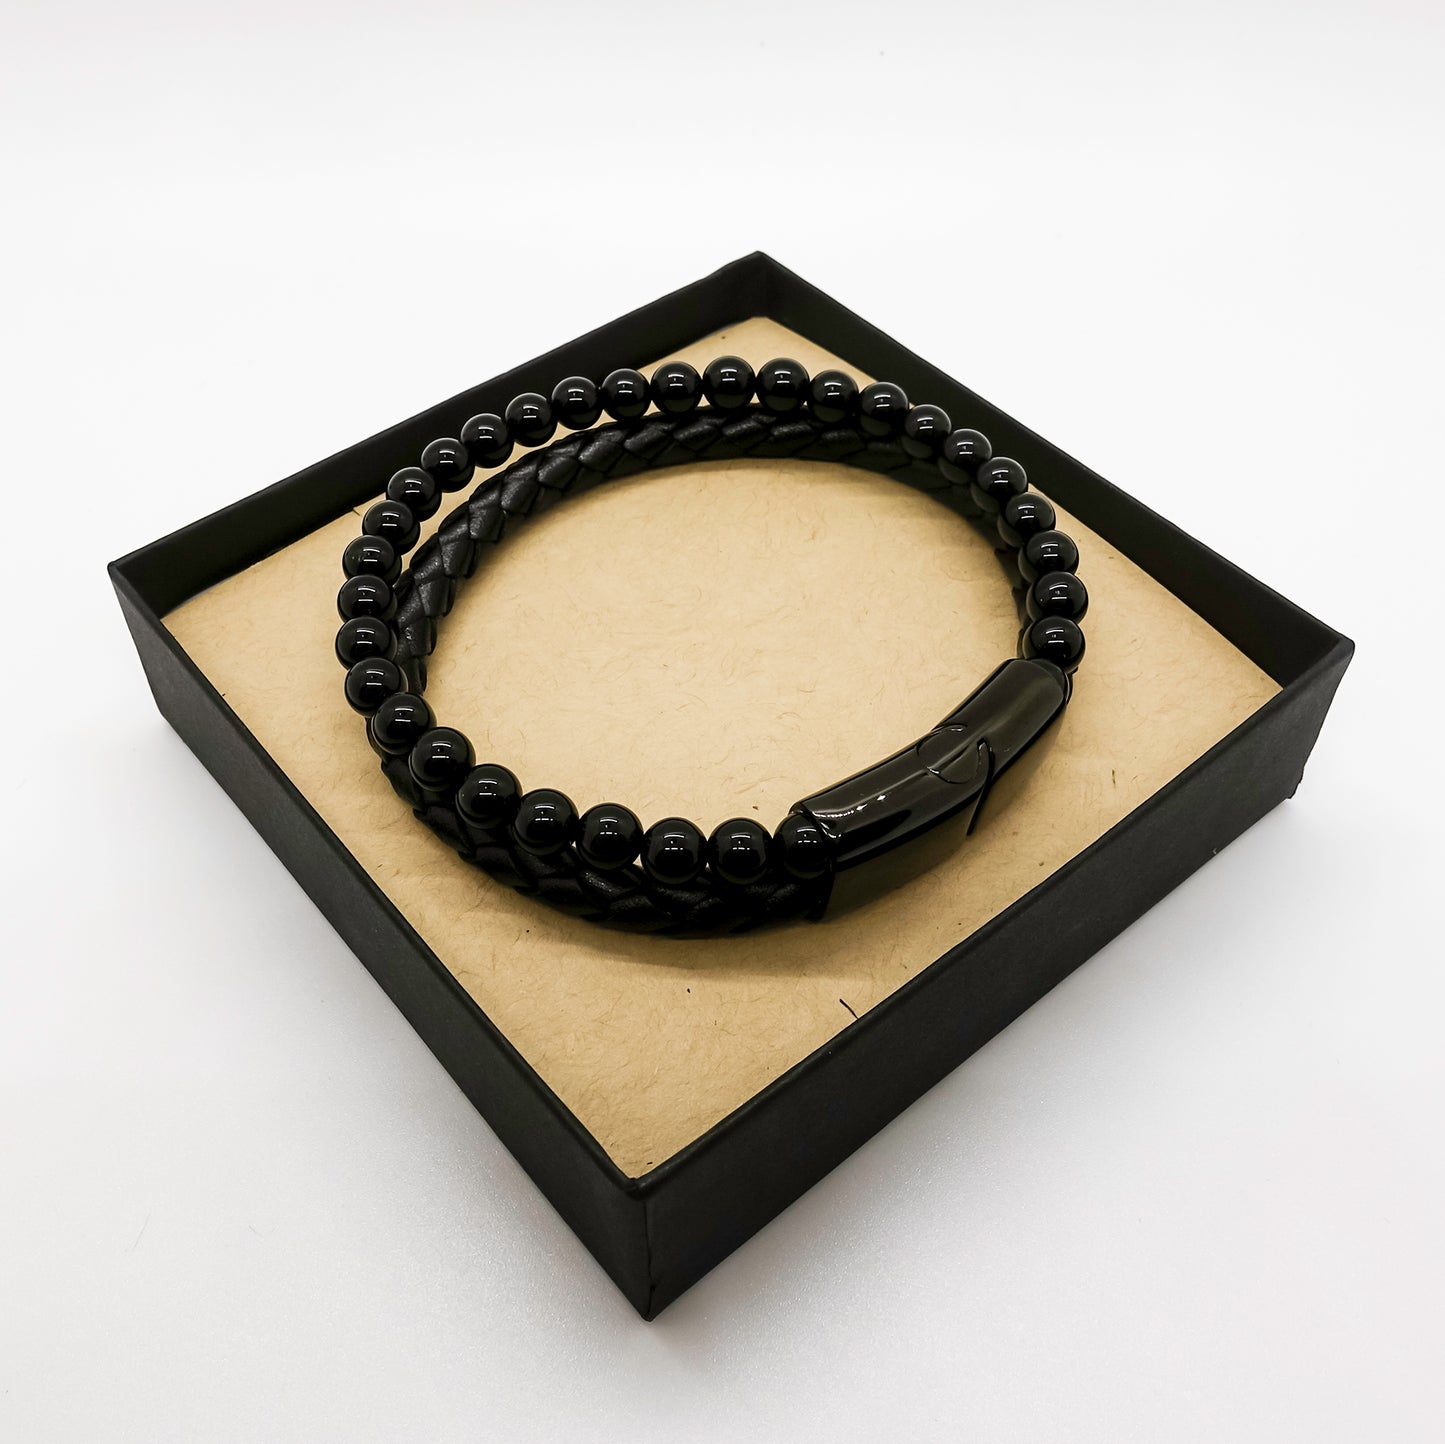 Stone Bracelet with Genuine Leather Braided Bracelet | To Husband